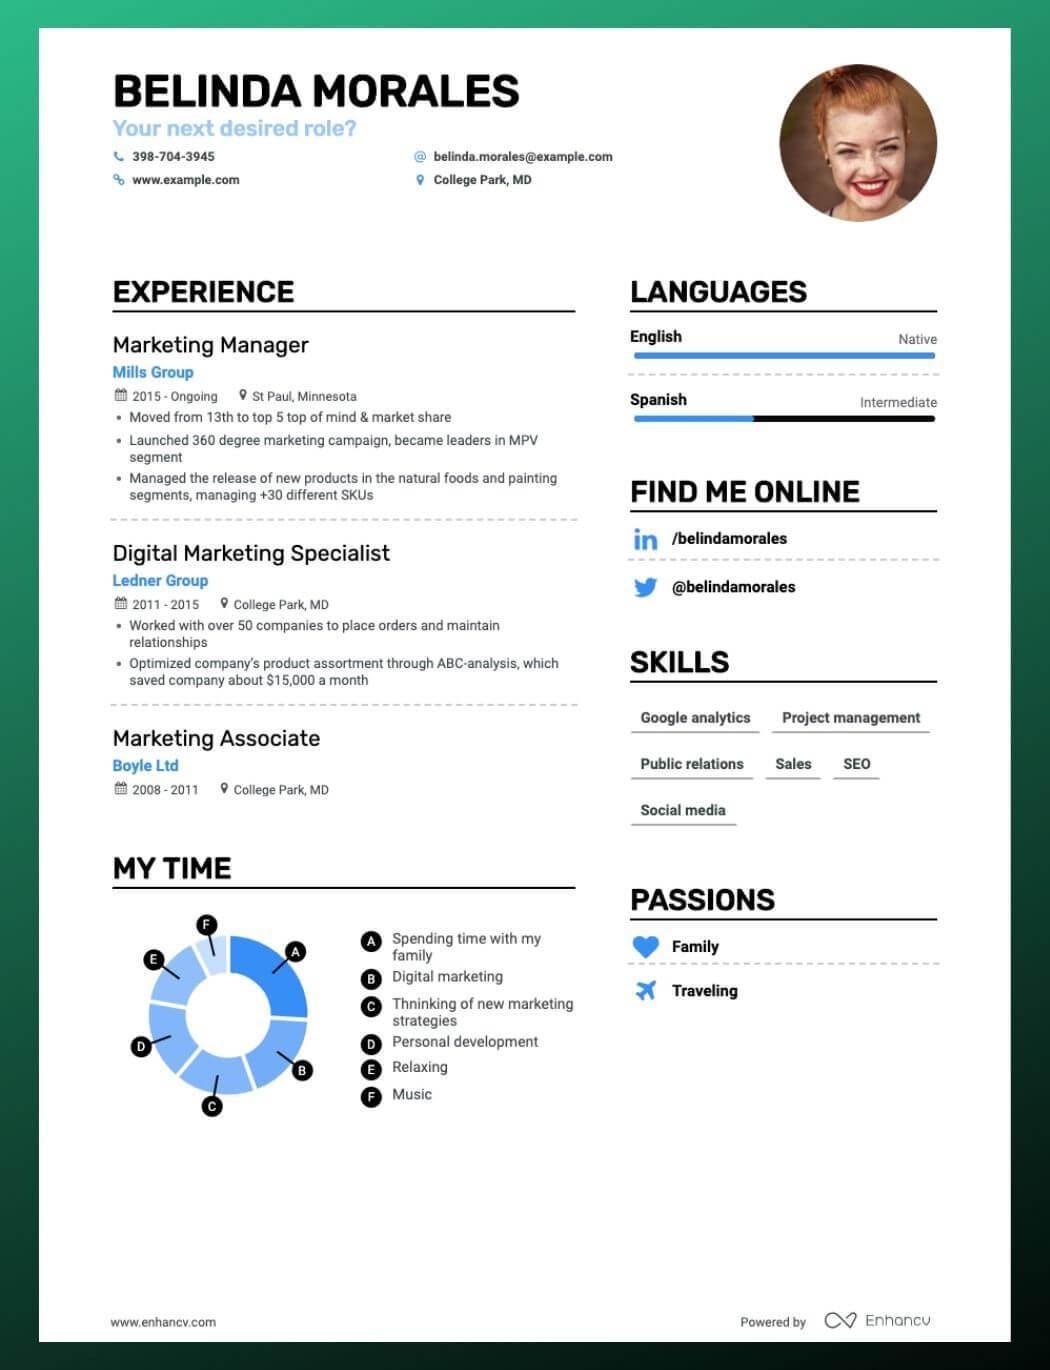 Enhancv Parts of a Job-Winning Resume: How to Choose Resume Elements 